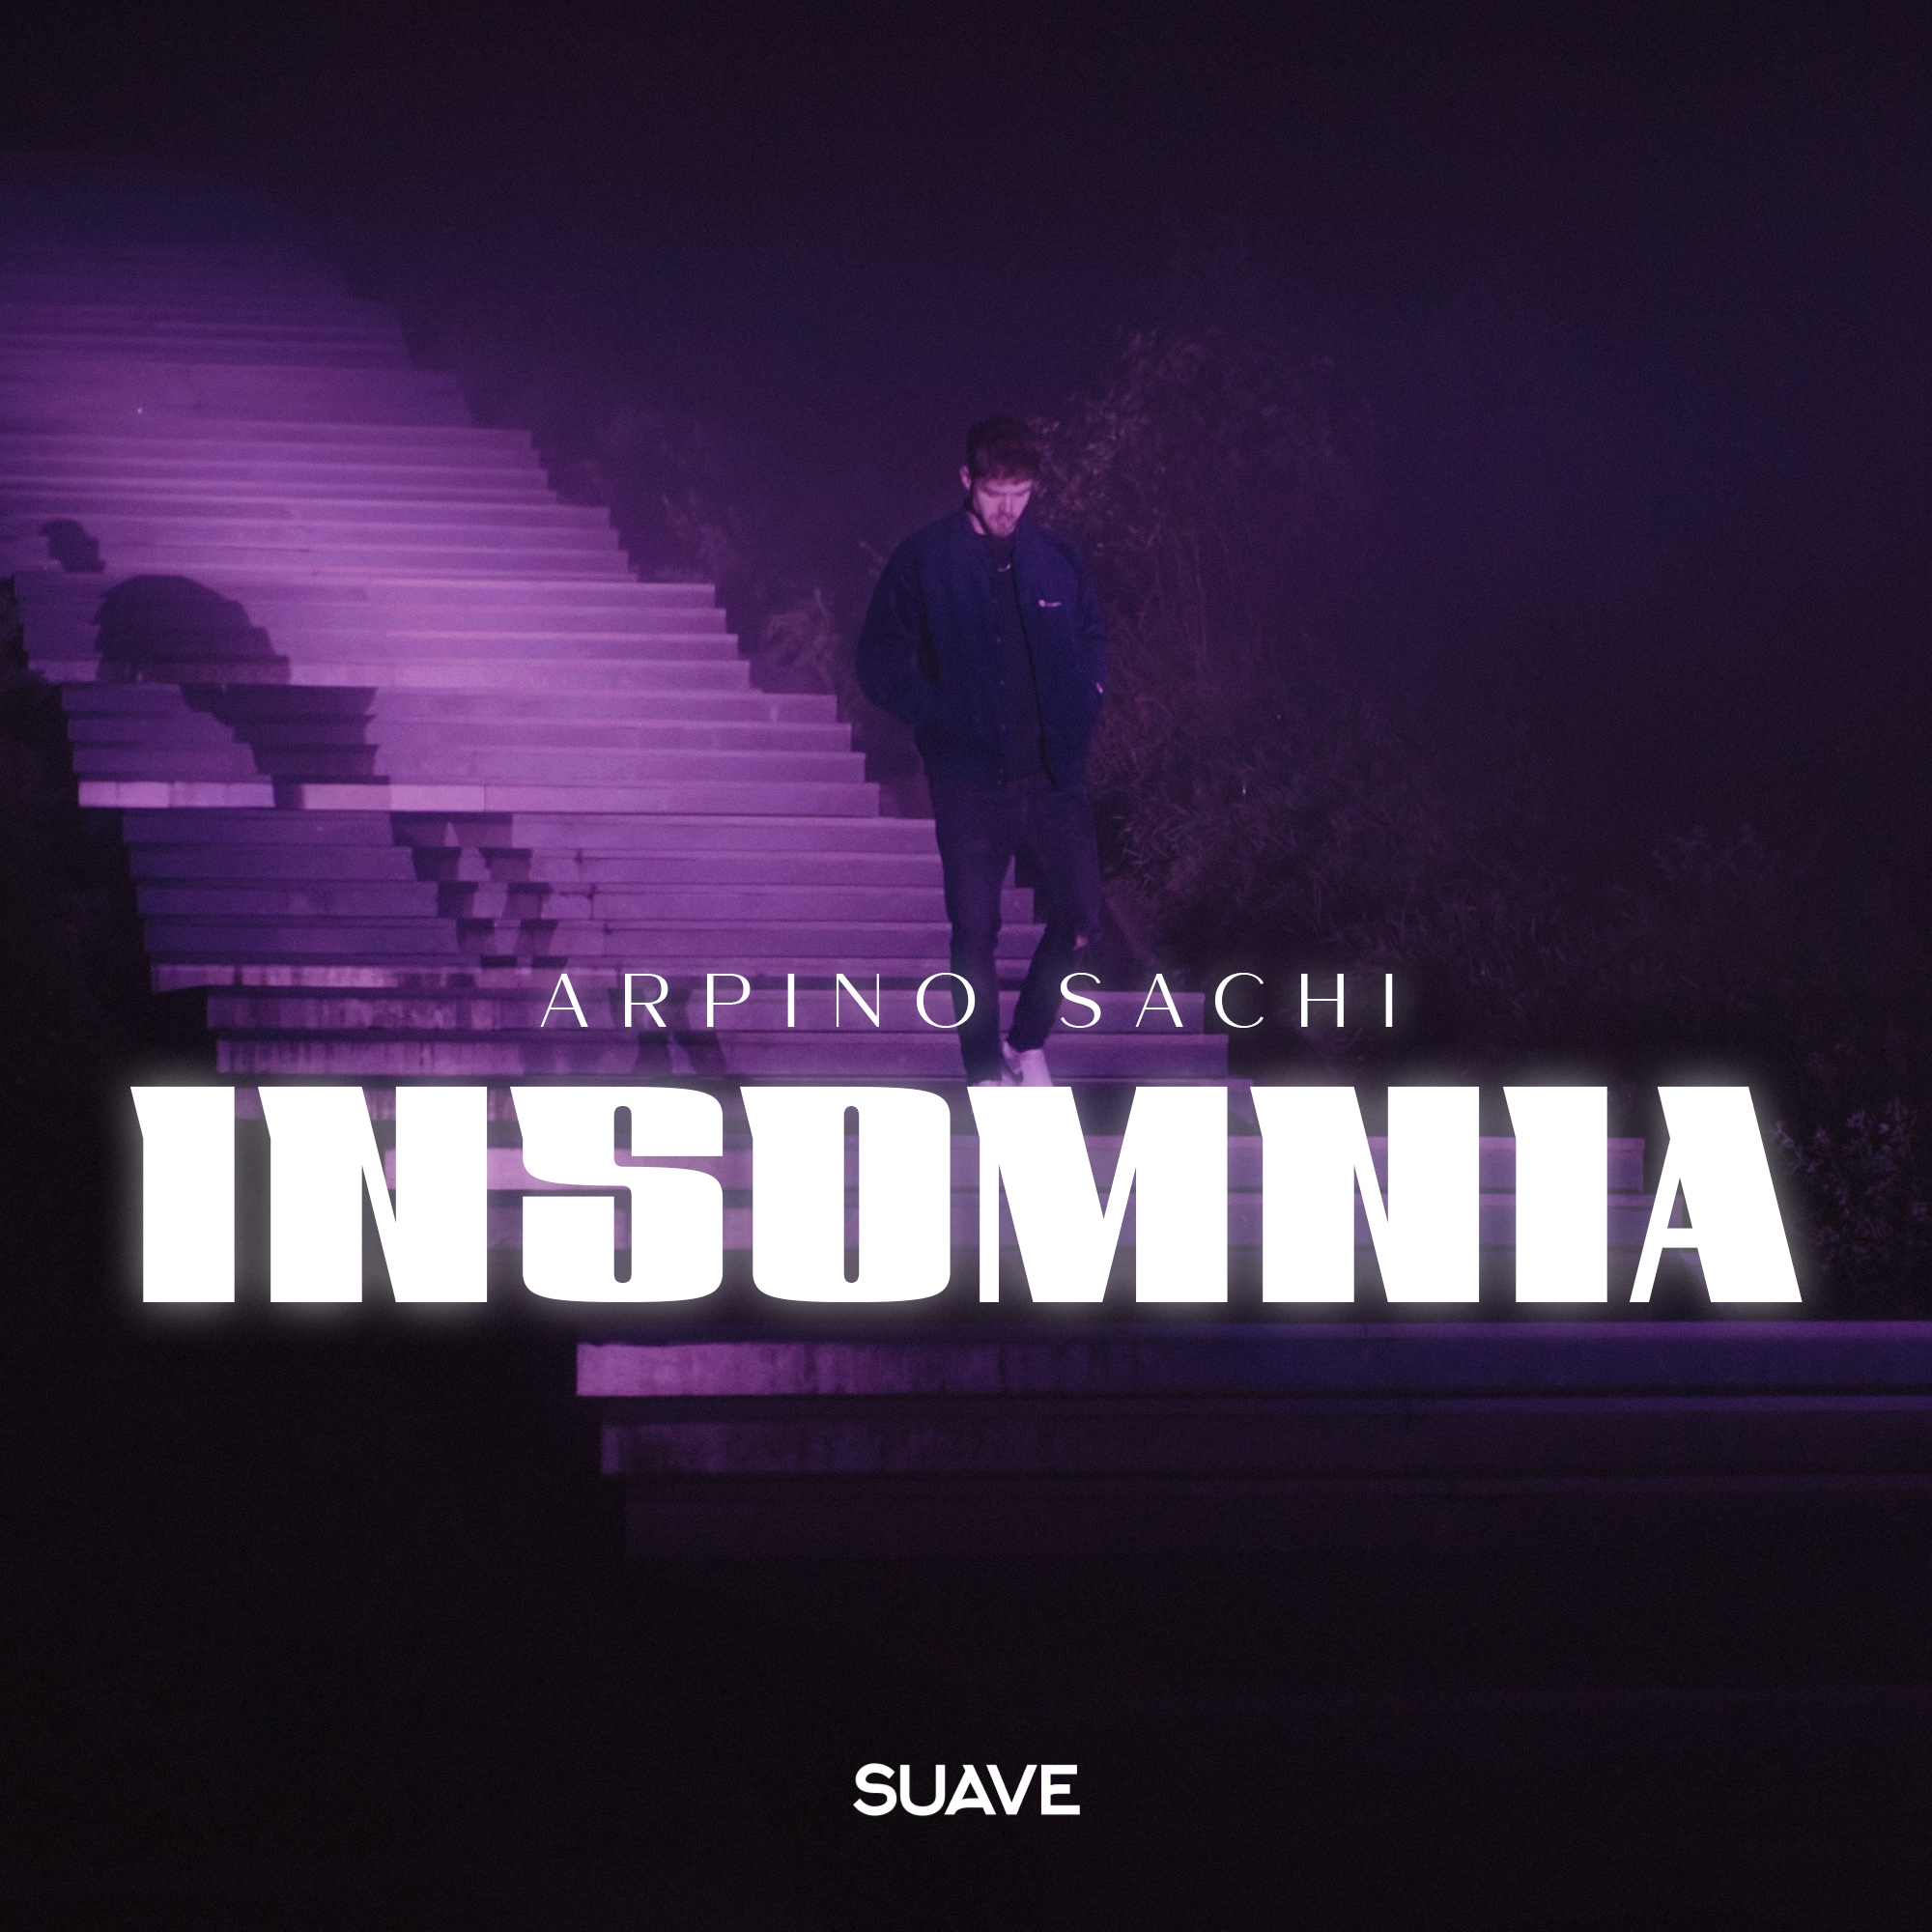 Arpino Sachi - Insomnia - Listen on Spotify, Deezer, YouTube, Google Play Music and Buy on Amazon, iTunes Google Play | EMDC Network